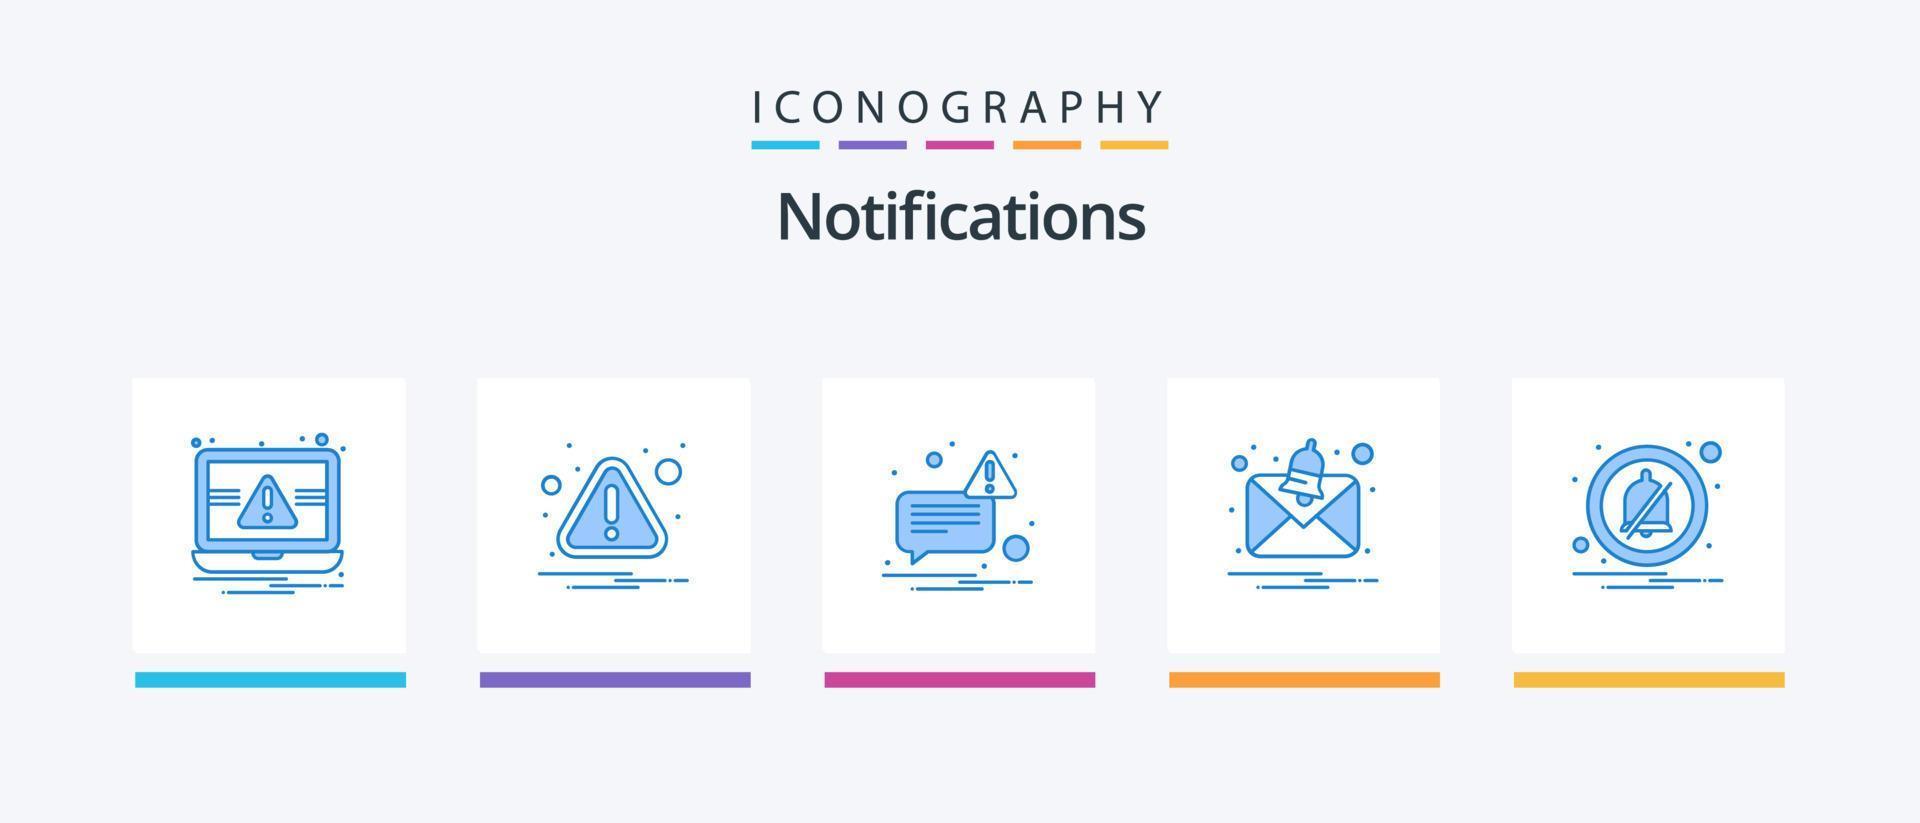 Notifications bleu pack d'icônes 5 comprenant. notification. message. alarme. message. conception d'icônes créatives vecteur